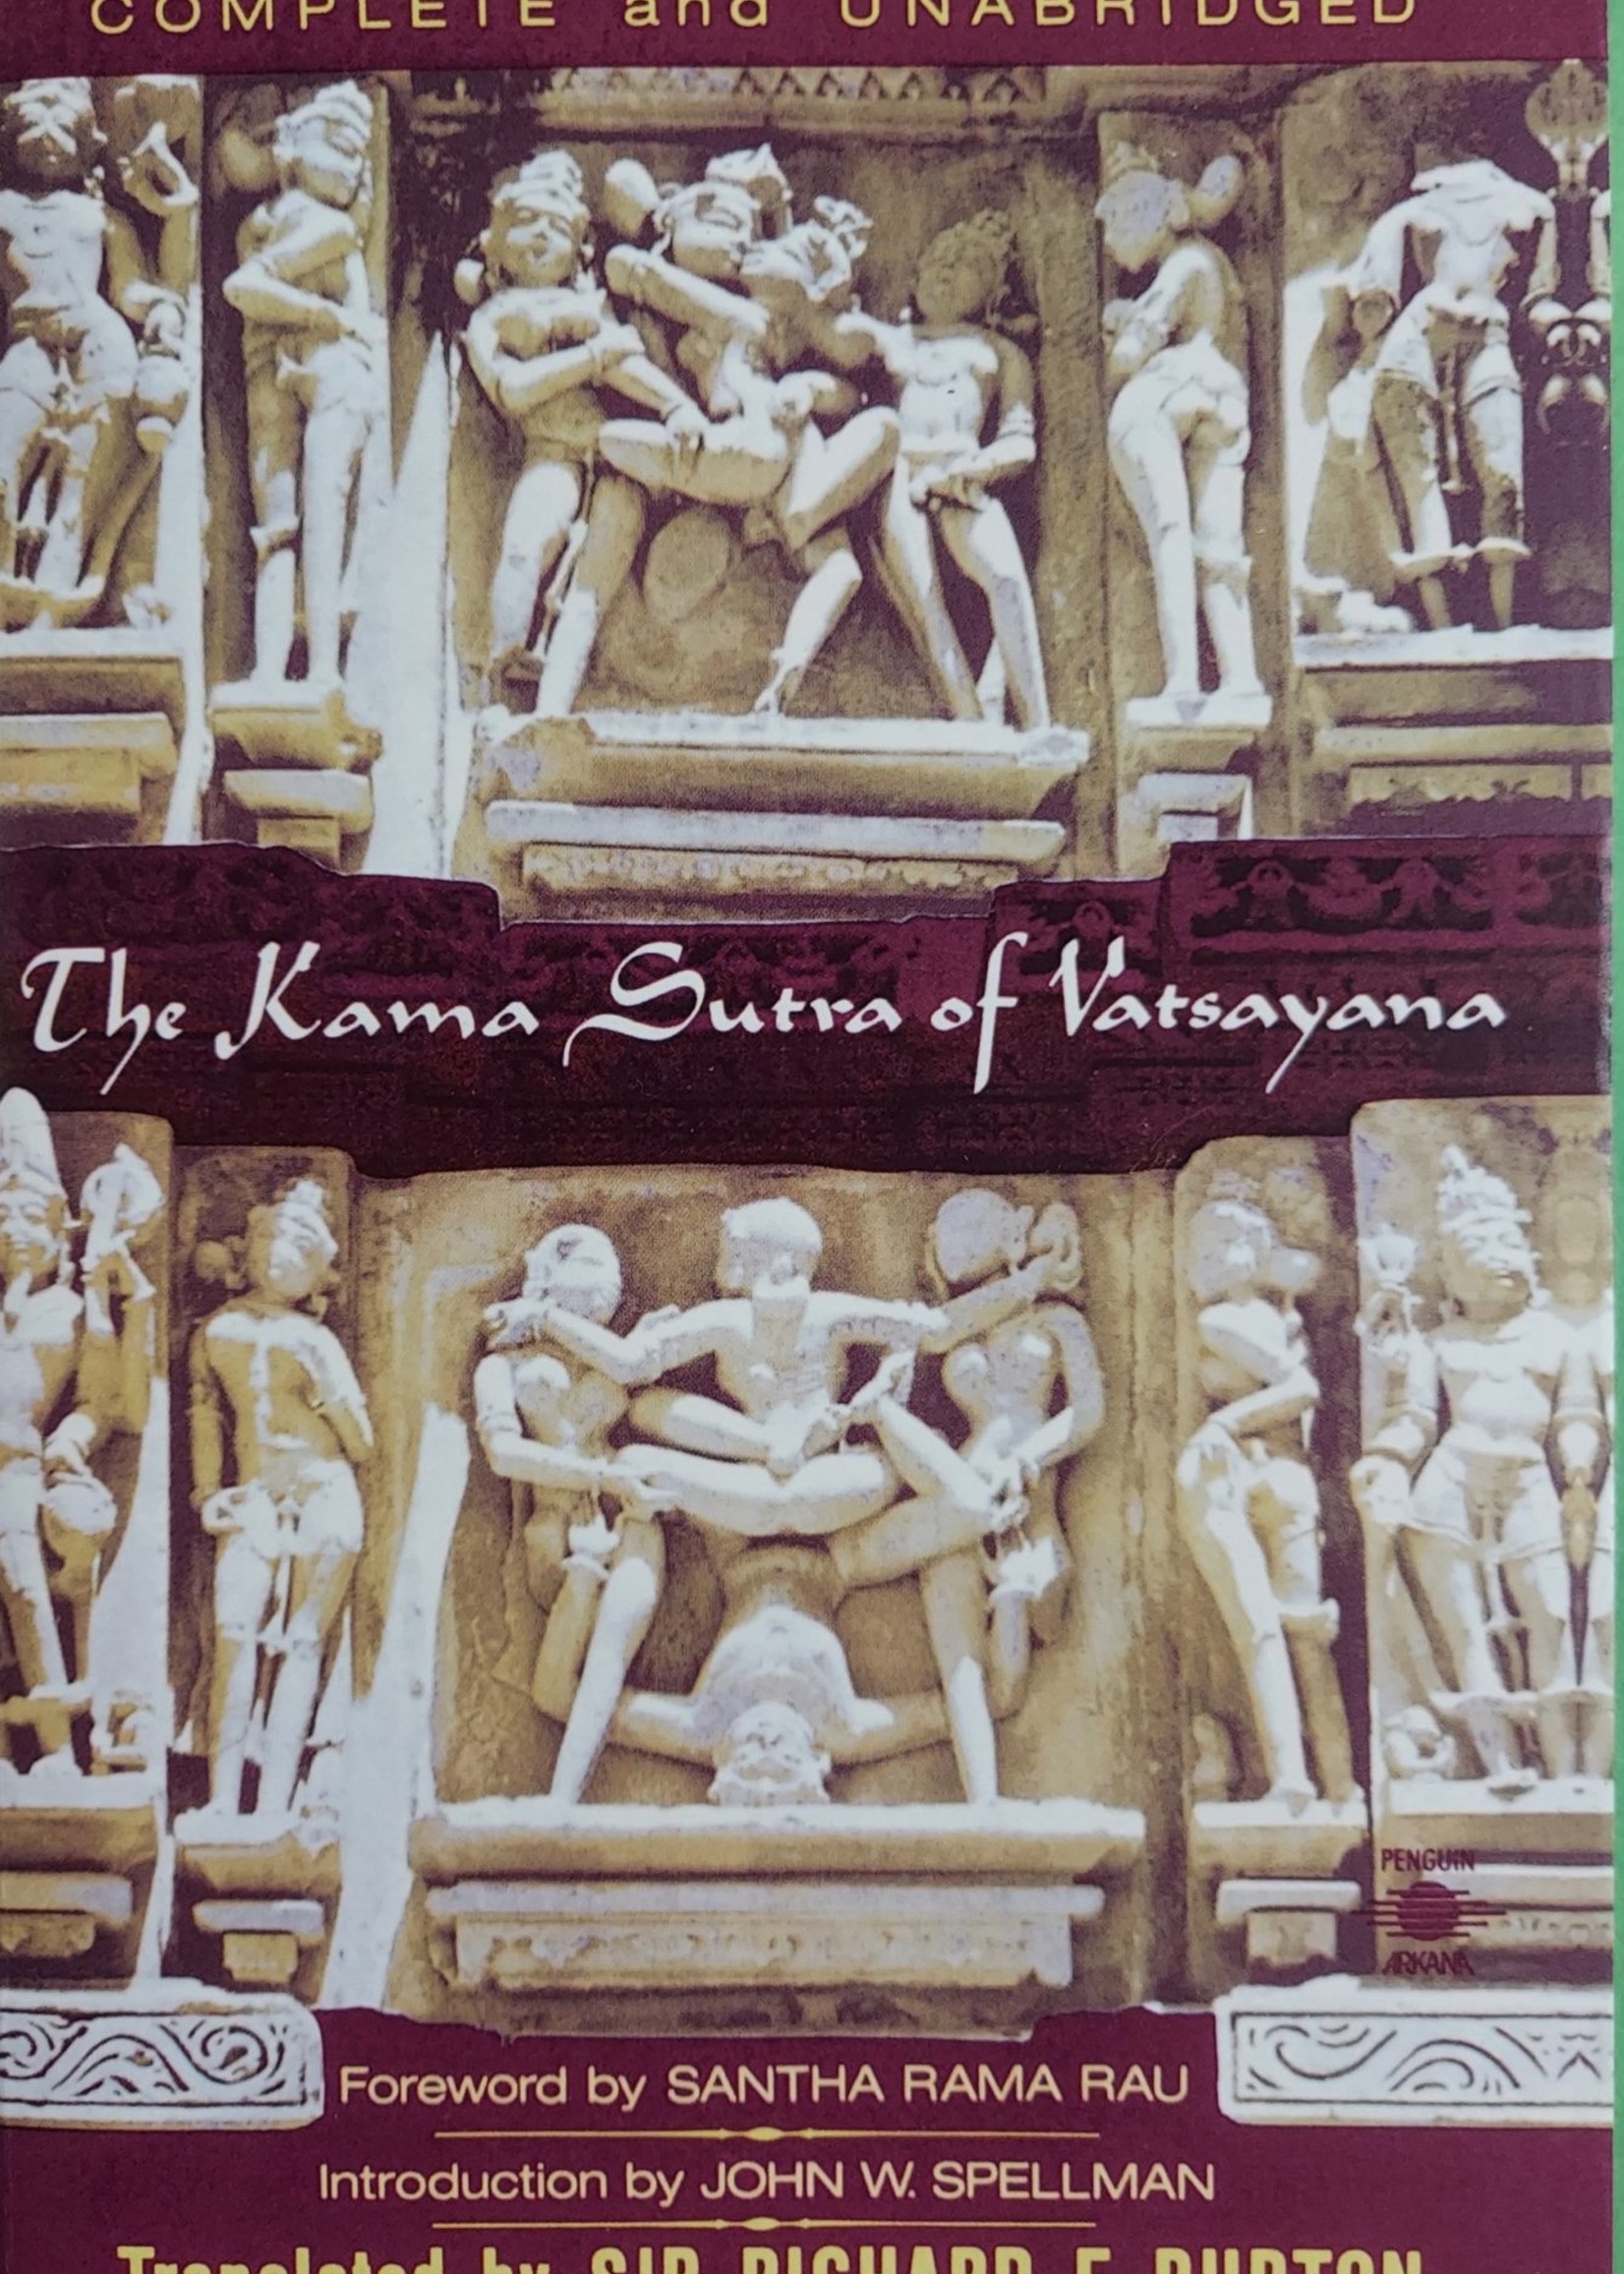 The Kama Sutra of Vatsayana-THE CLASSIC HINDU TREATISE ON LOVE AND SOCIAL CONDUCT By VATSAYANA Foreword by Santha Rama Rau Introduction by John W. Spellman Translated by Richard Francis Burton